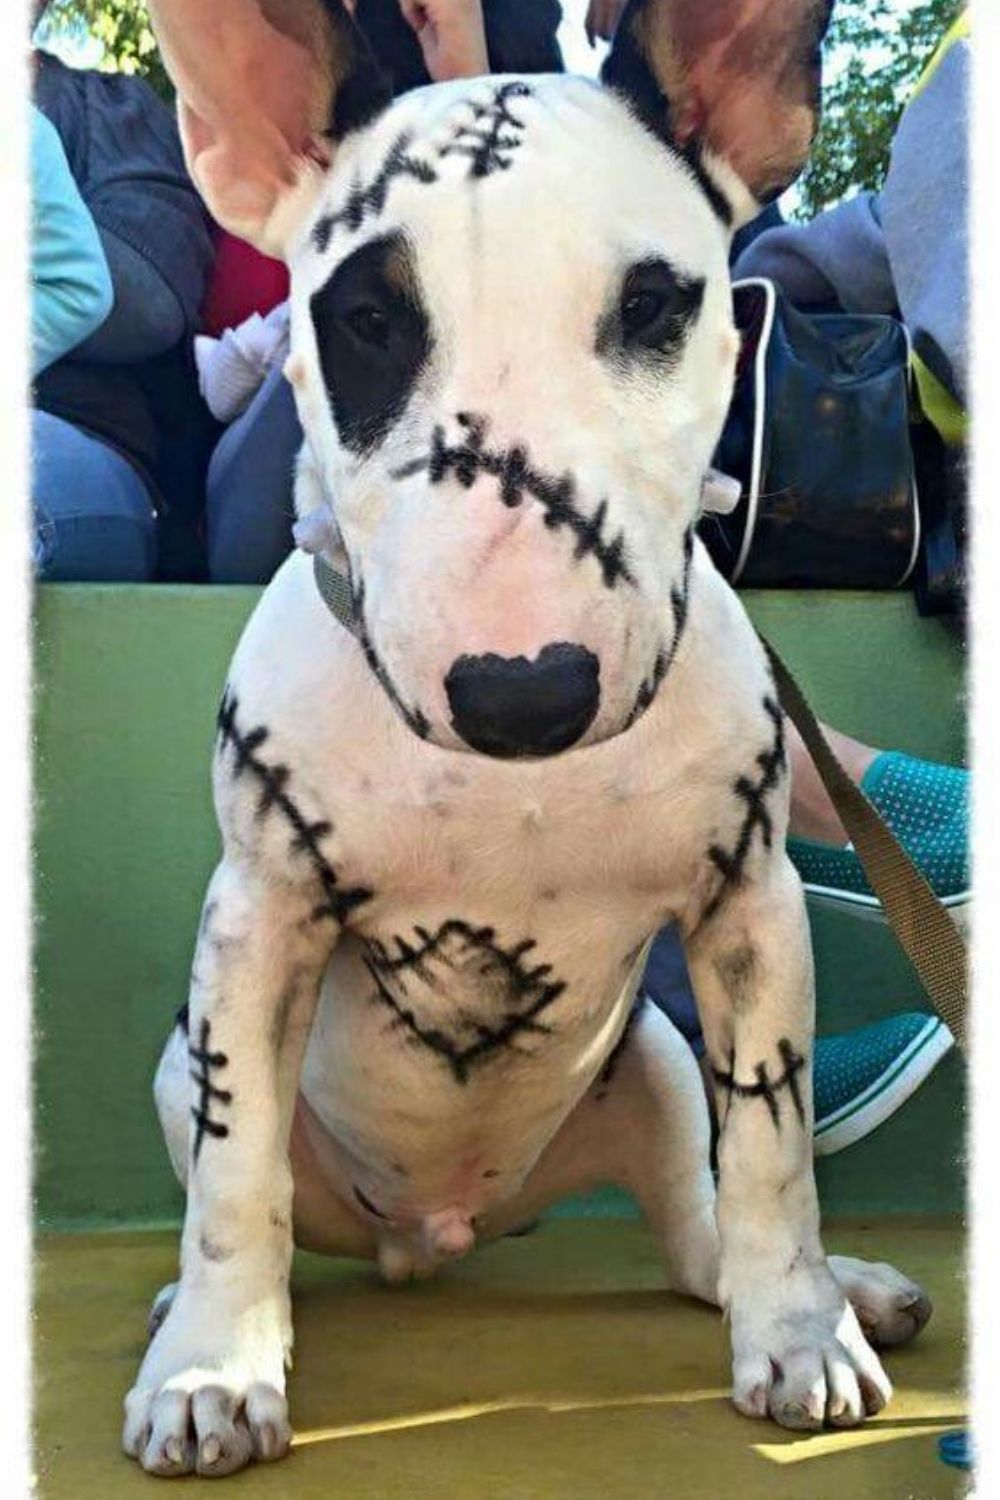 Adorable dog makeup idea for Halloween party.